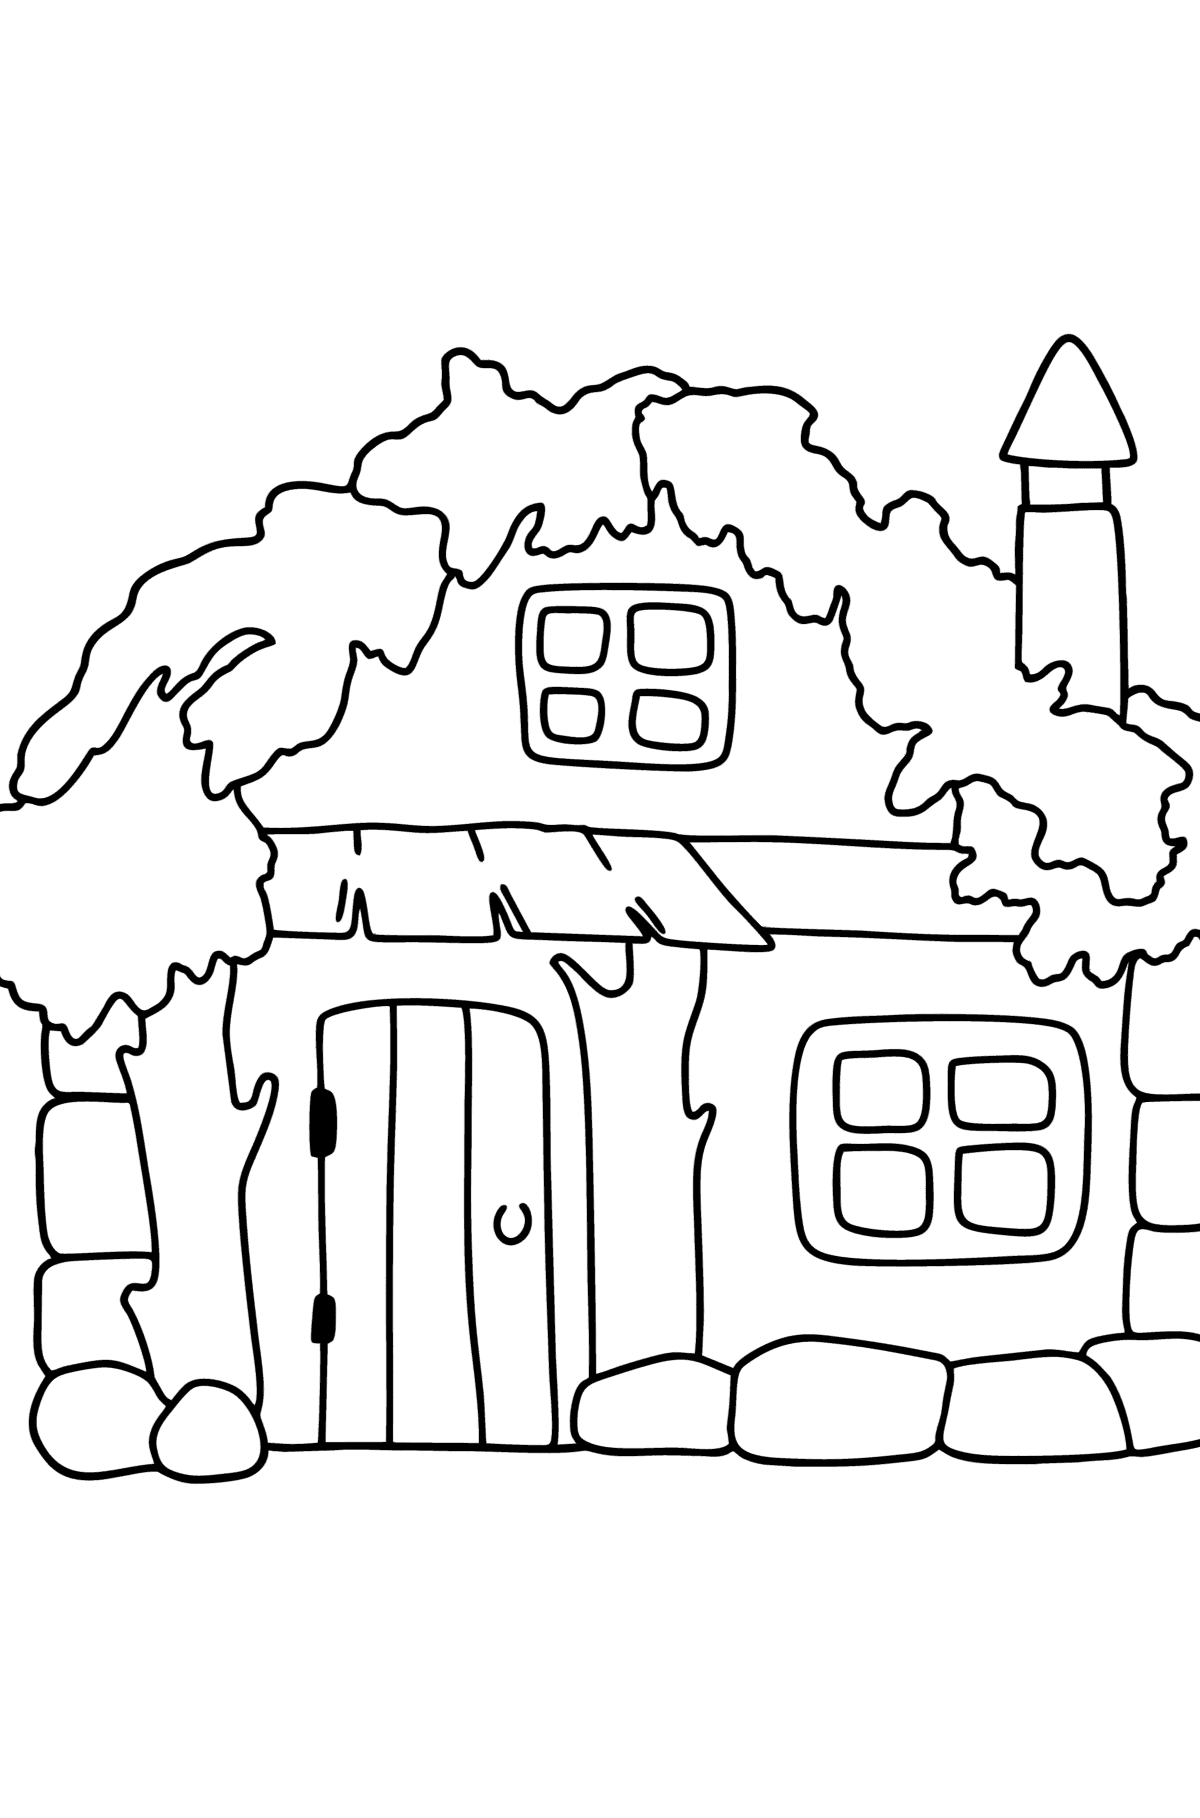 Dibujo de Cabaña para colorear - Dibujos para Colorear para Niños